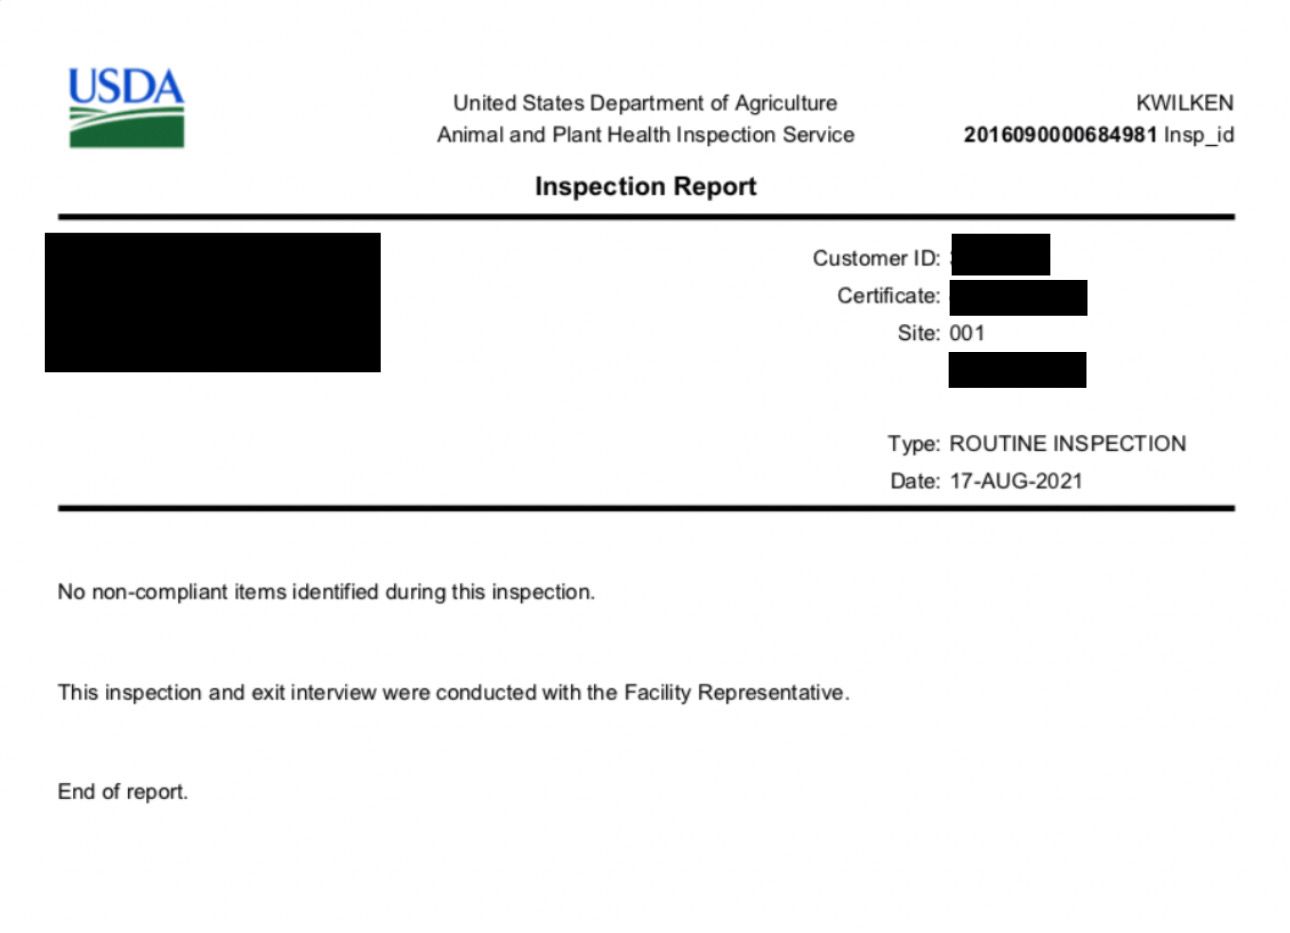 USDA routine inspection